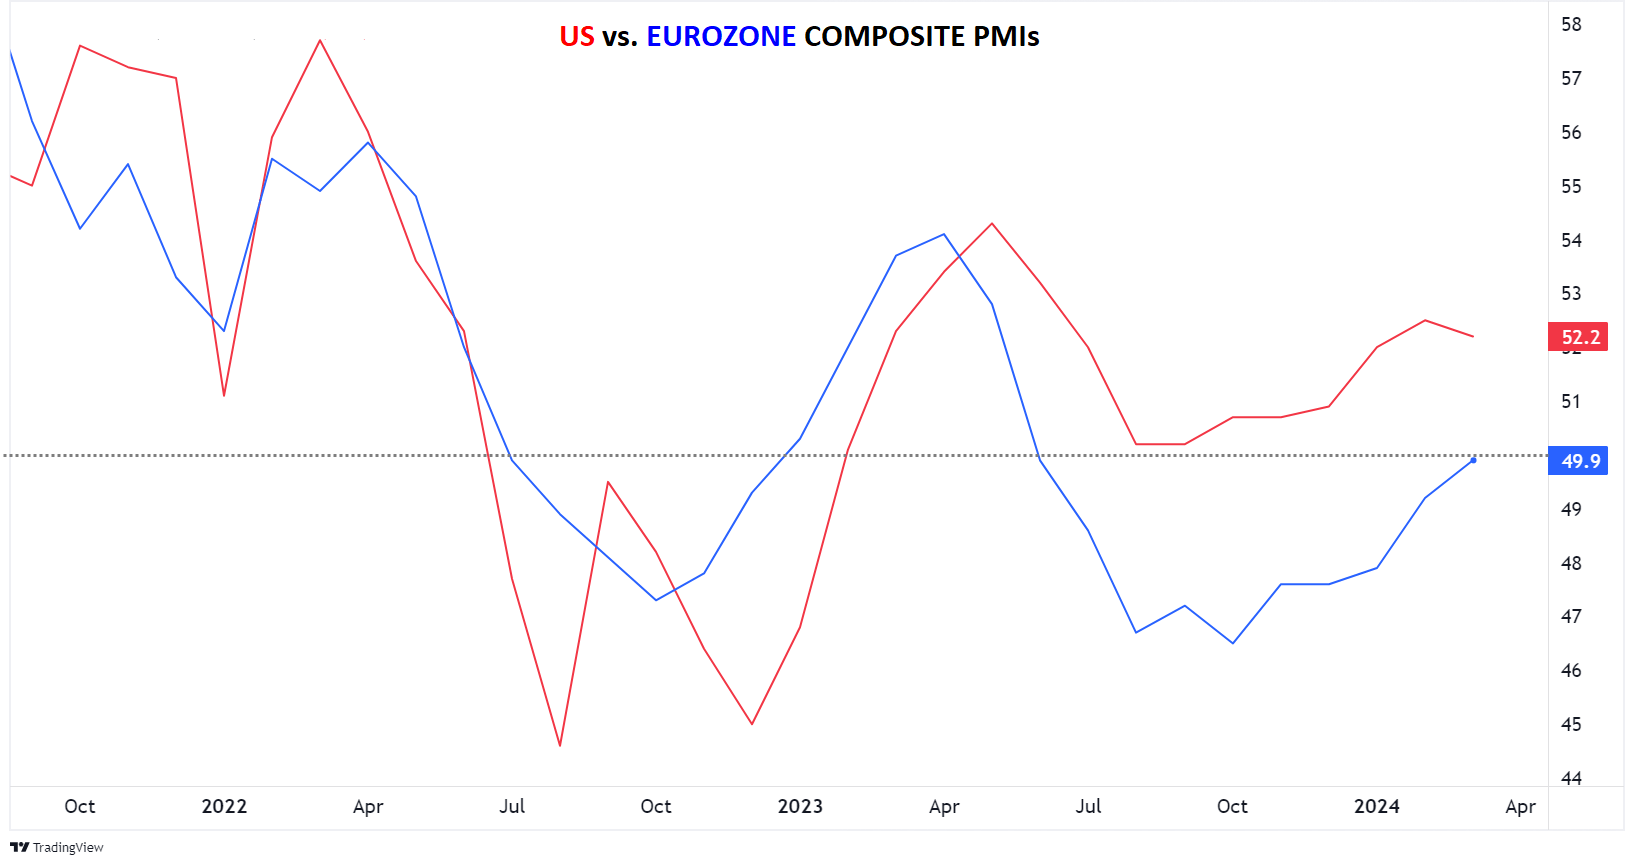 US vs Eurozone composite PMIs chart